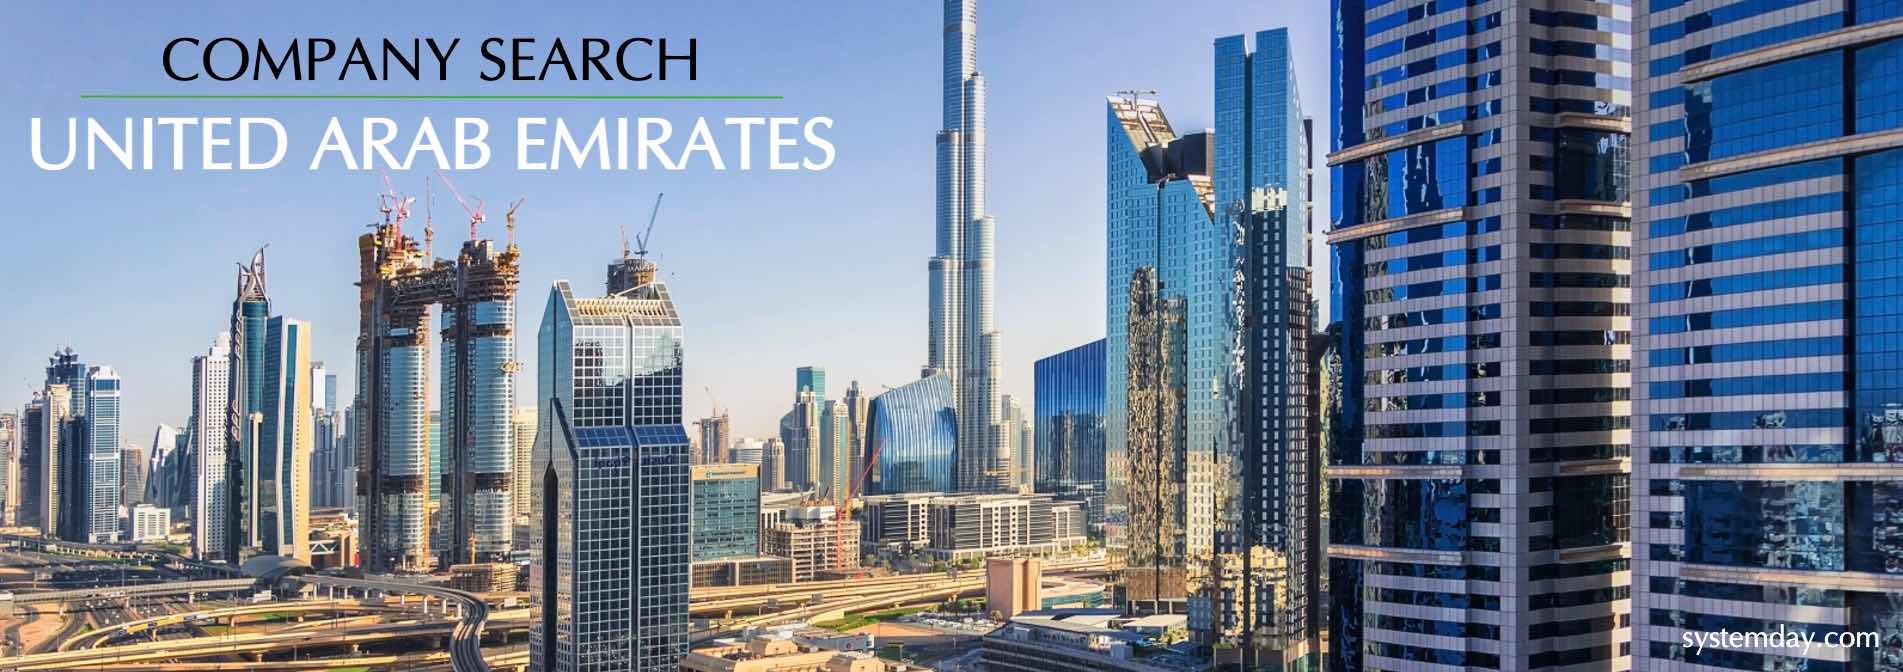 UAE Company Search